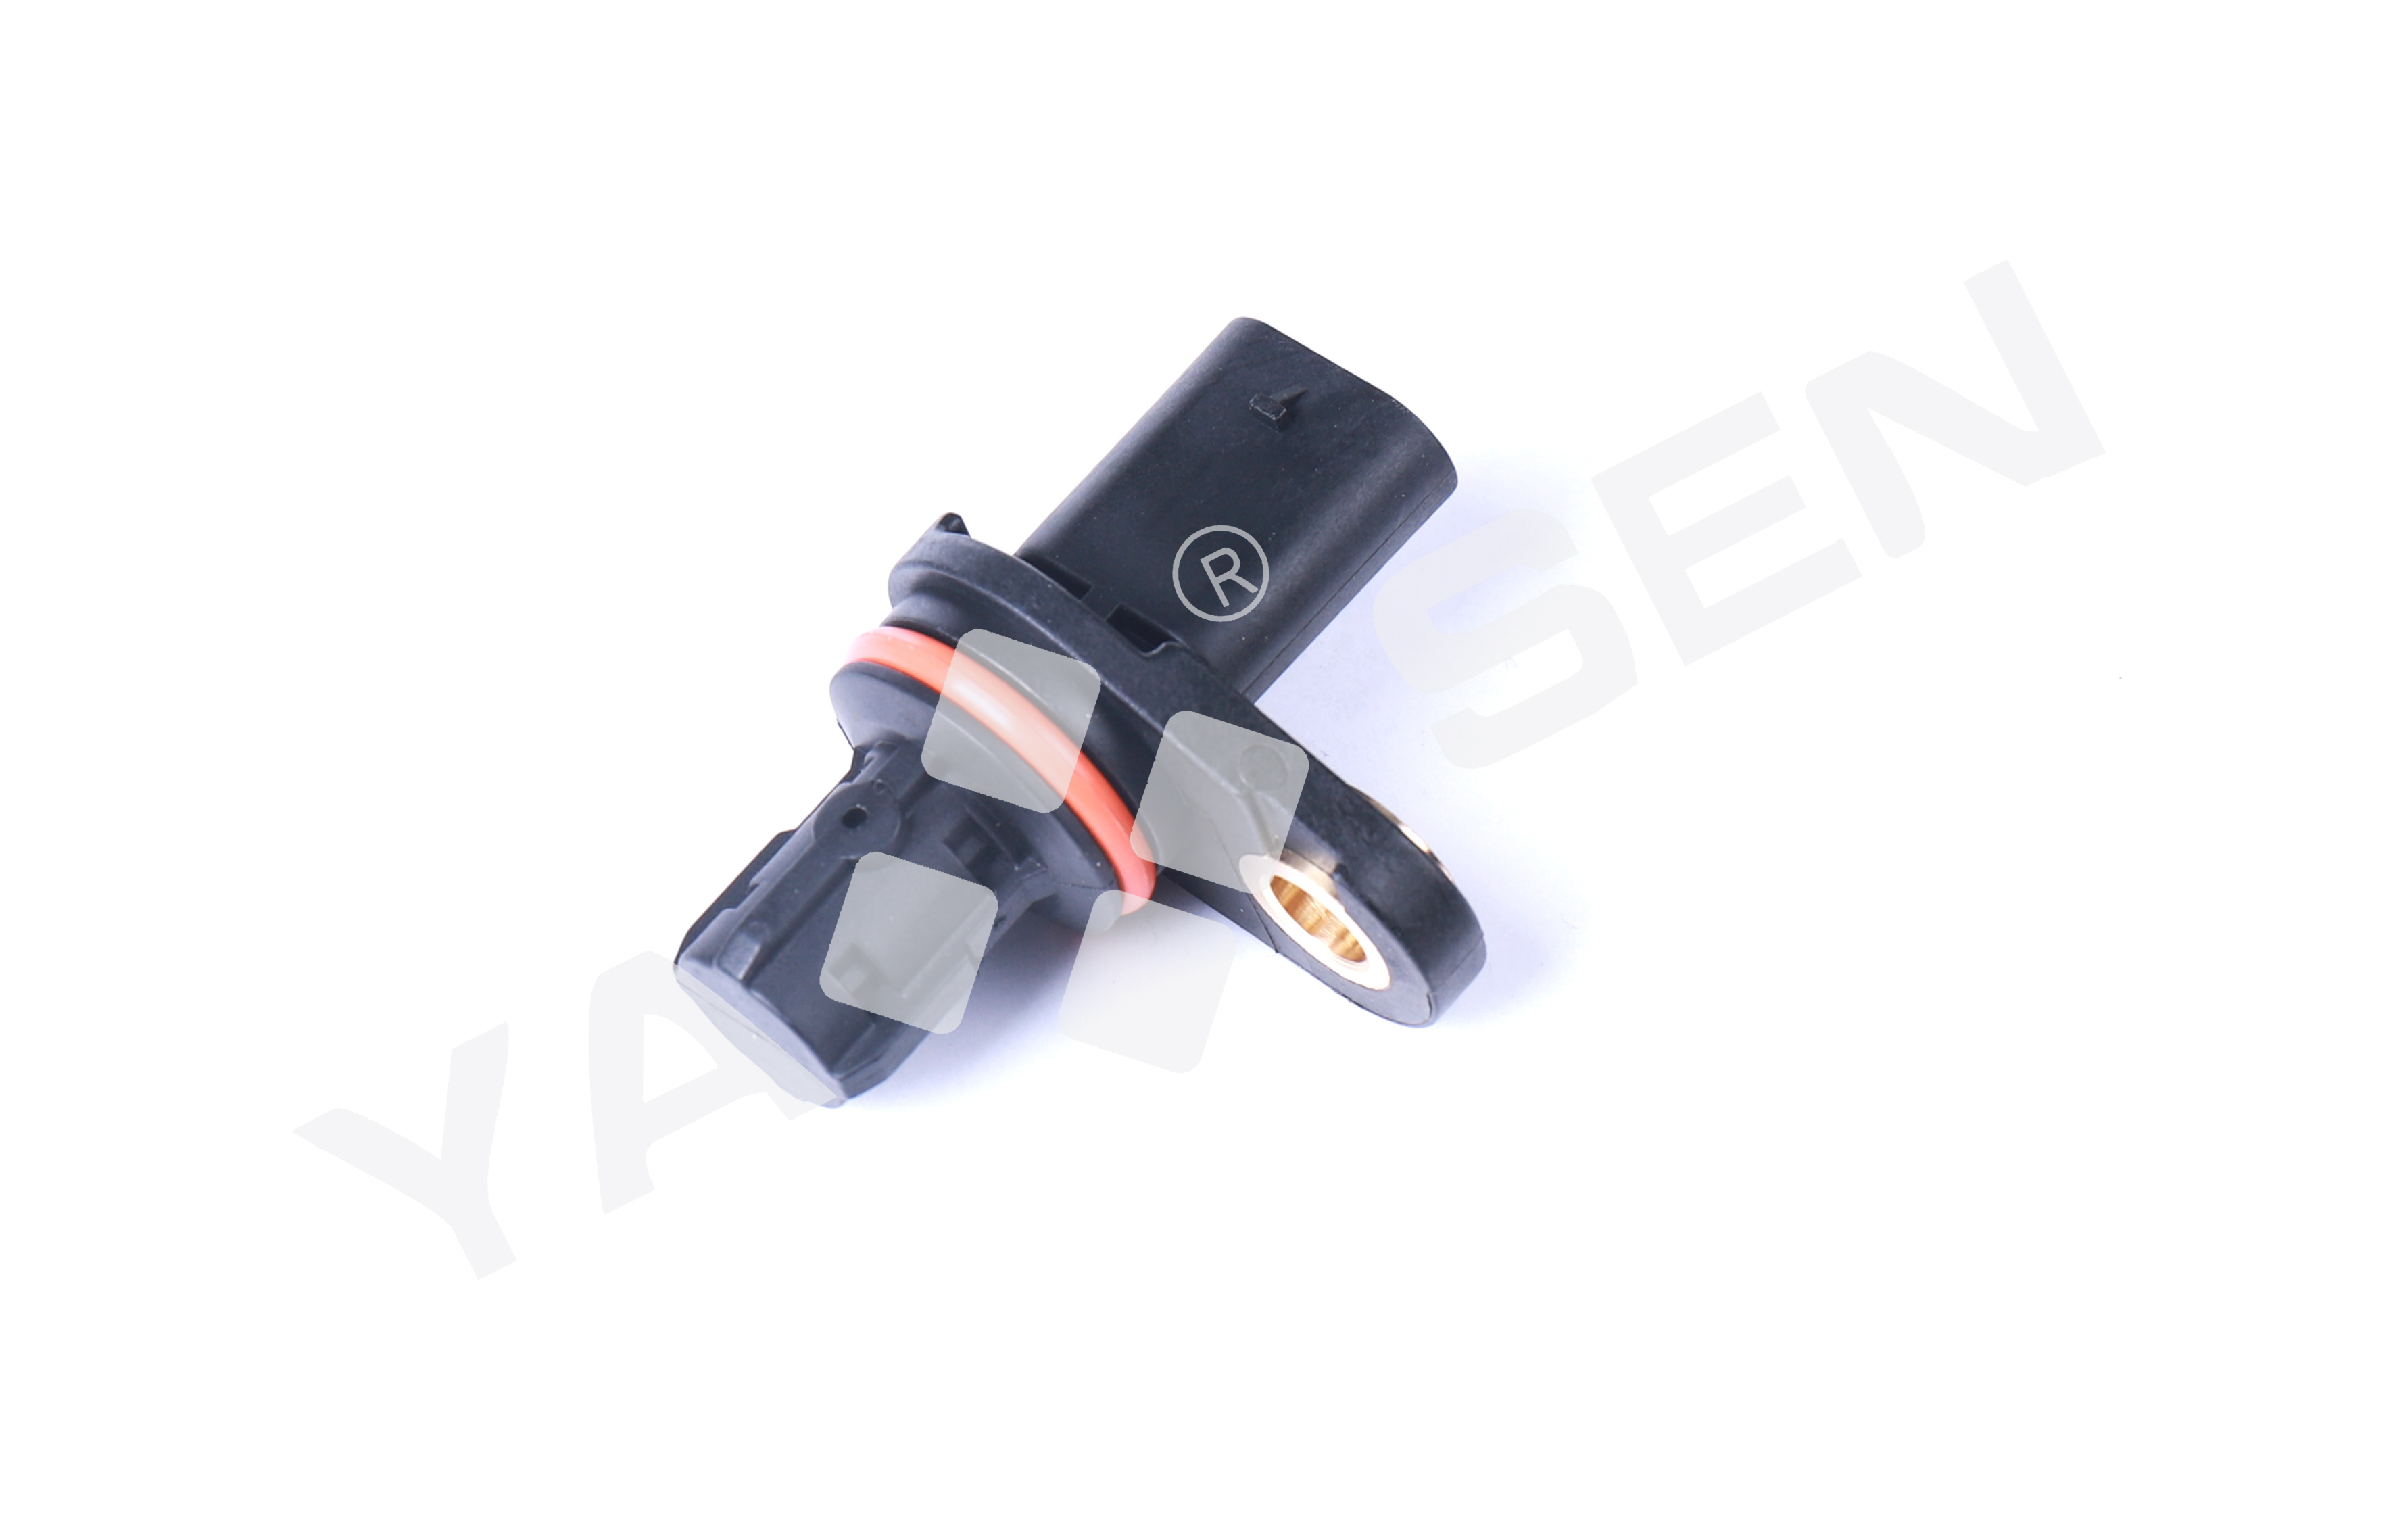 Auto Camshaft position sensor  for CHEVROLET/DODGE, 55565708  25195555 PC850  5S11890  SU13343  2134521  CSS1851 1802-492473 213